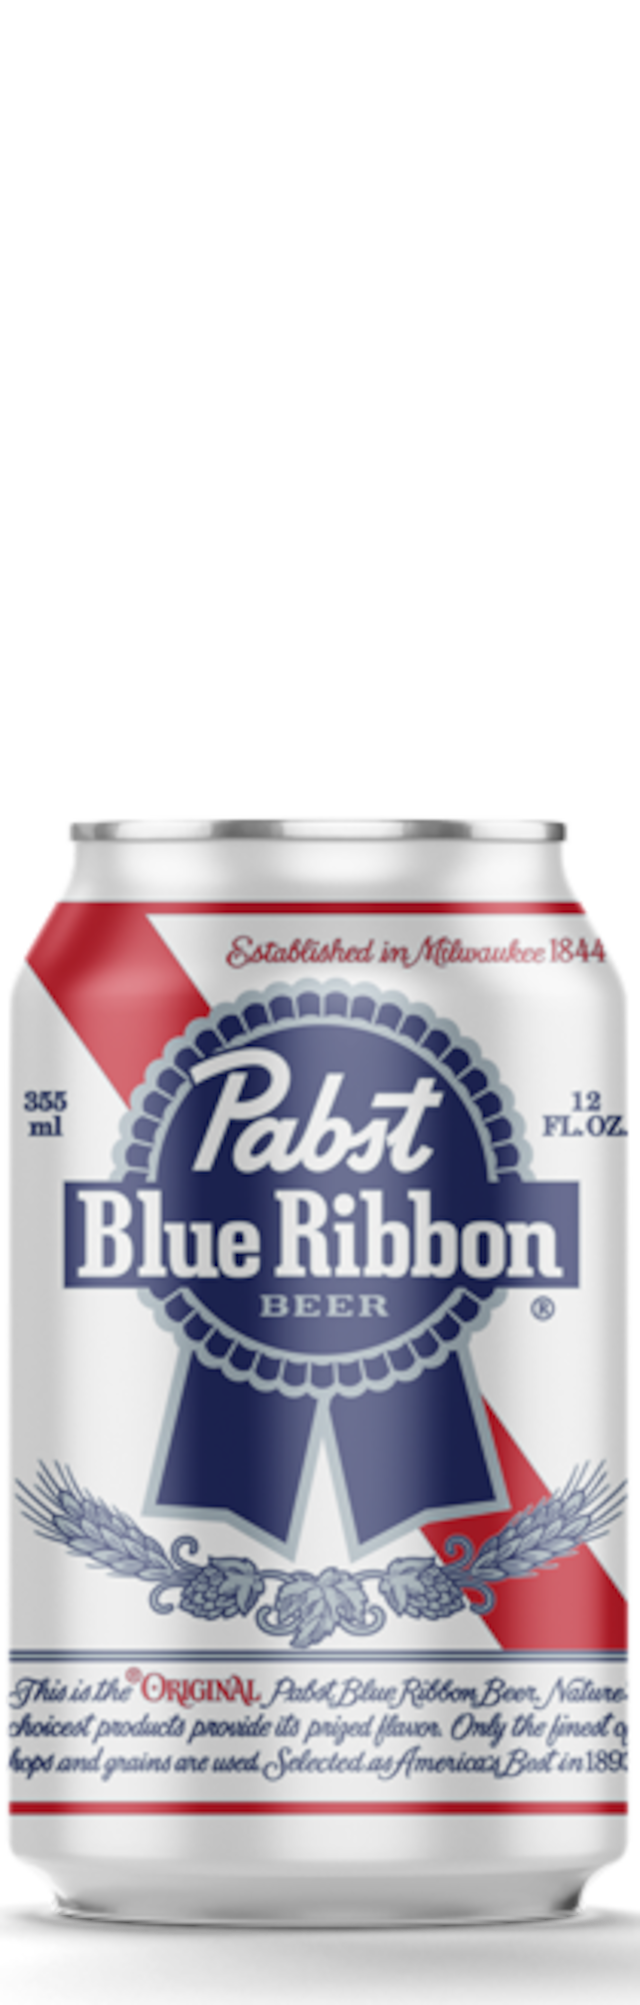 pabst blue ribbon パブスト ブルーリボン ブランケット - 雑貨